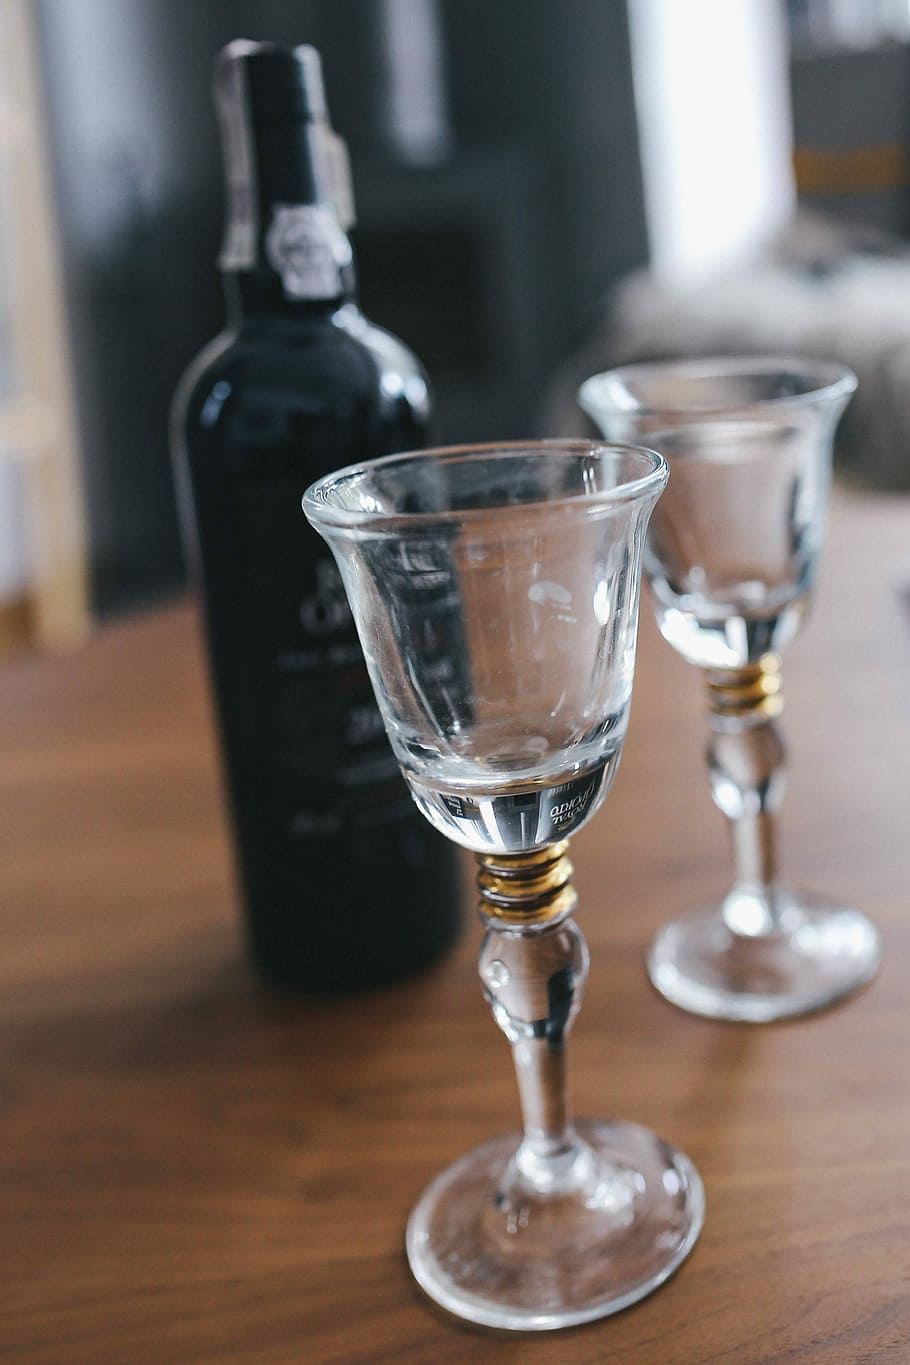 two, empty, wine glasses, bottle, table, bottle of wine, glasses, wine, alcohol, glassware